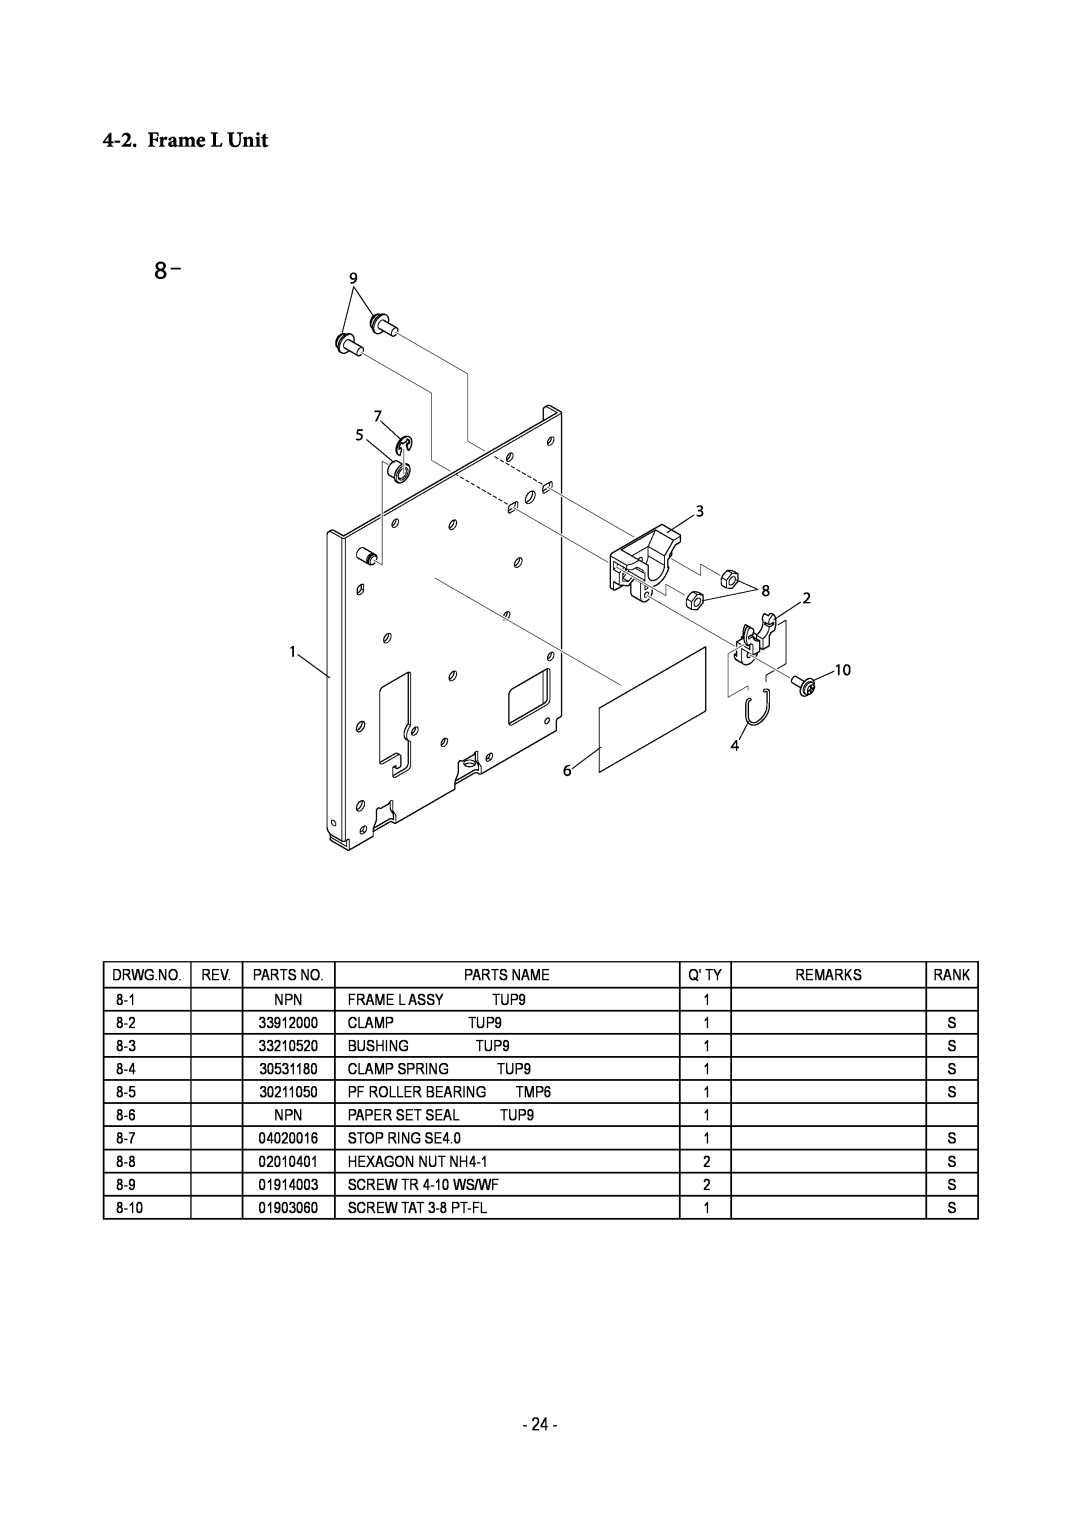 Star Micronics TUP500 technical manual Frame L Unit 